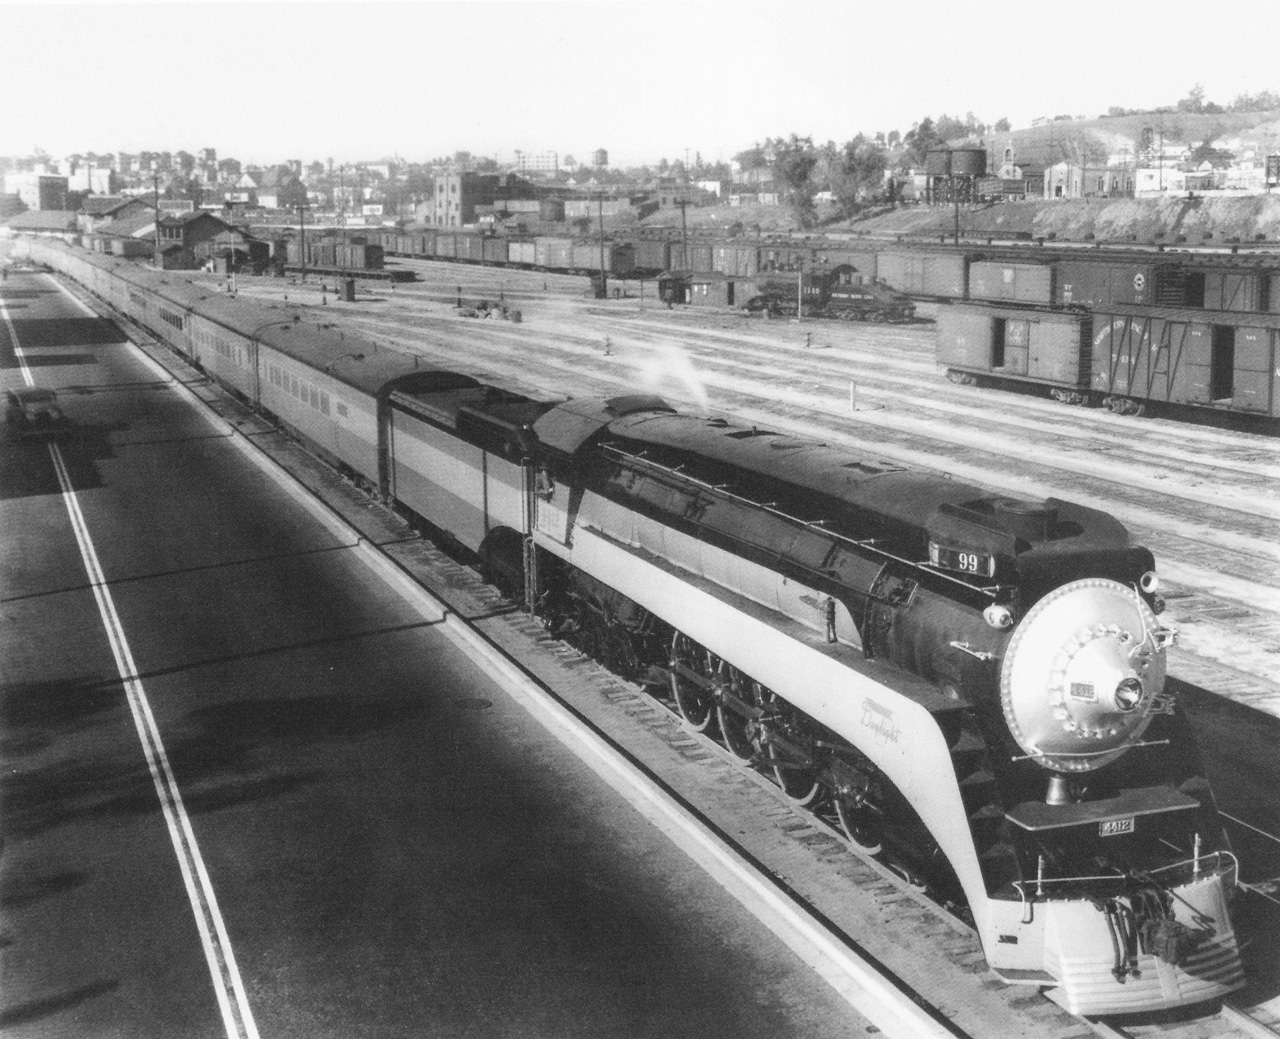  45. A Daylight locomotive at River Station Depot, adjacent to North Spring Street, 1937 